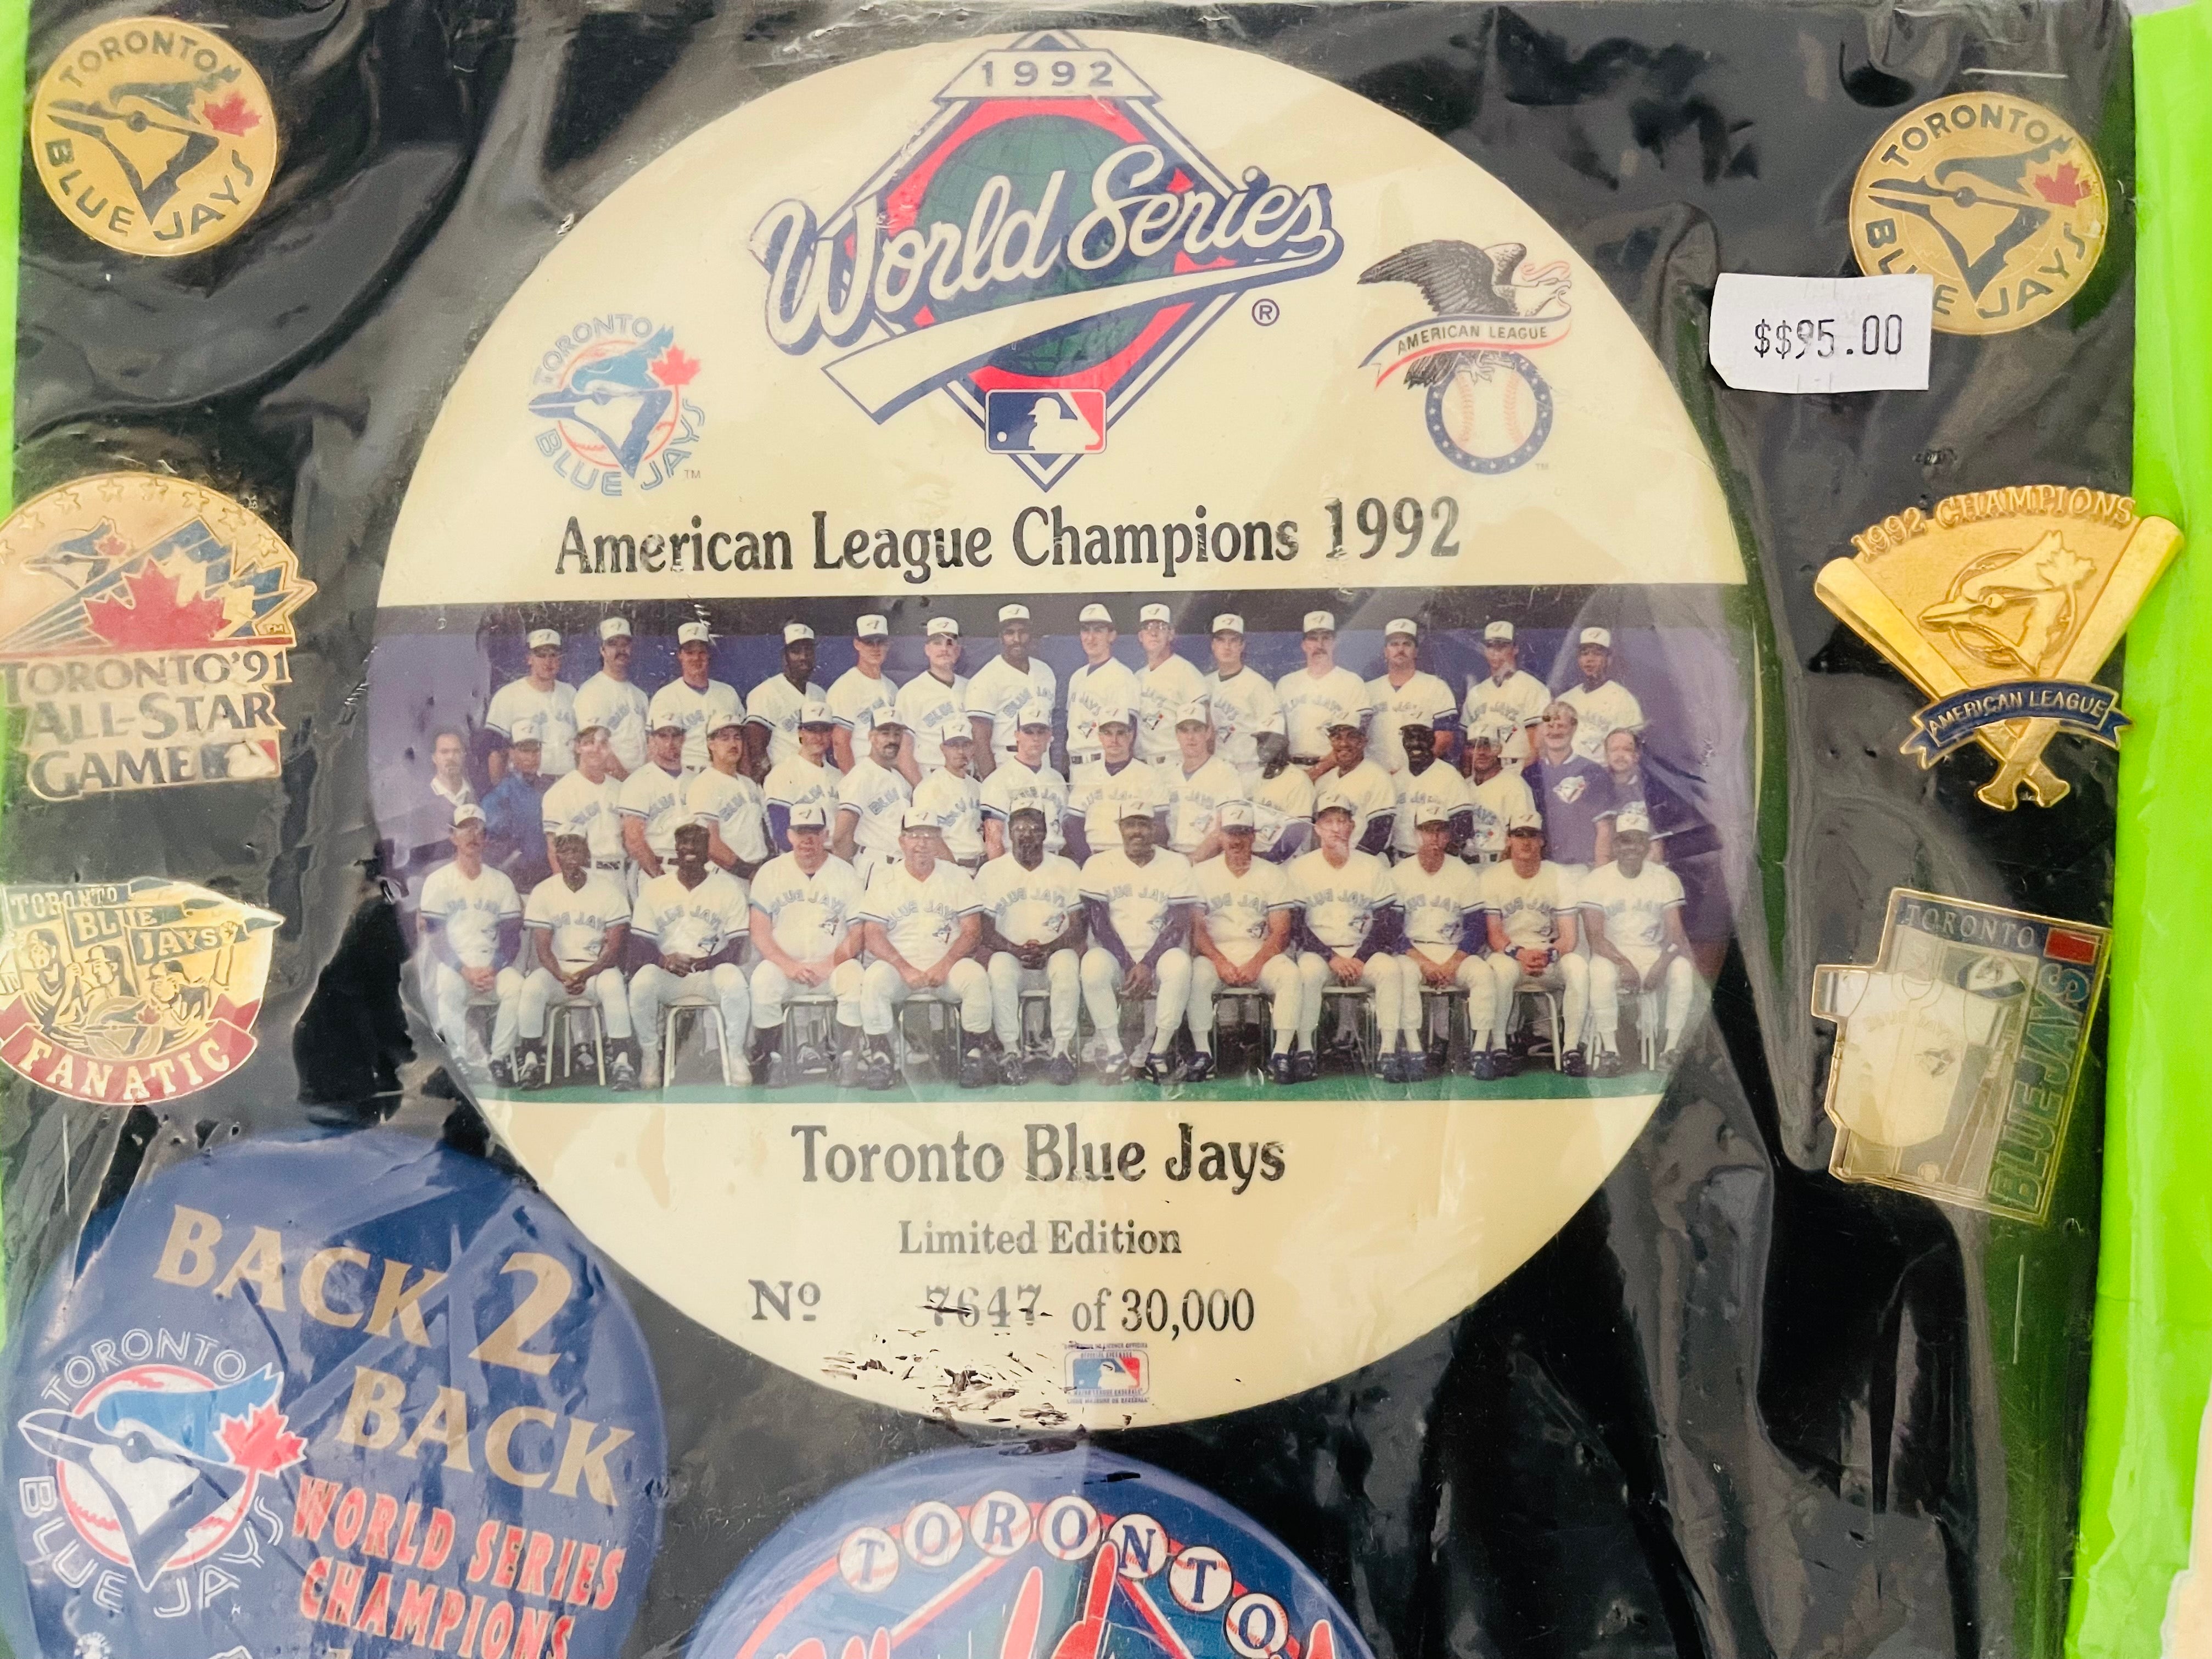 Toronto Blue Jays baseball vintage button collection 1970s-1990s